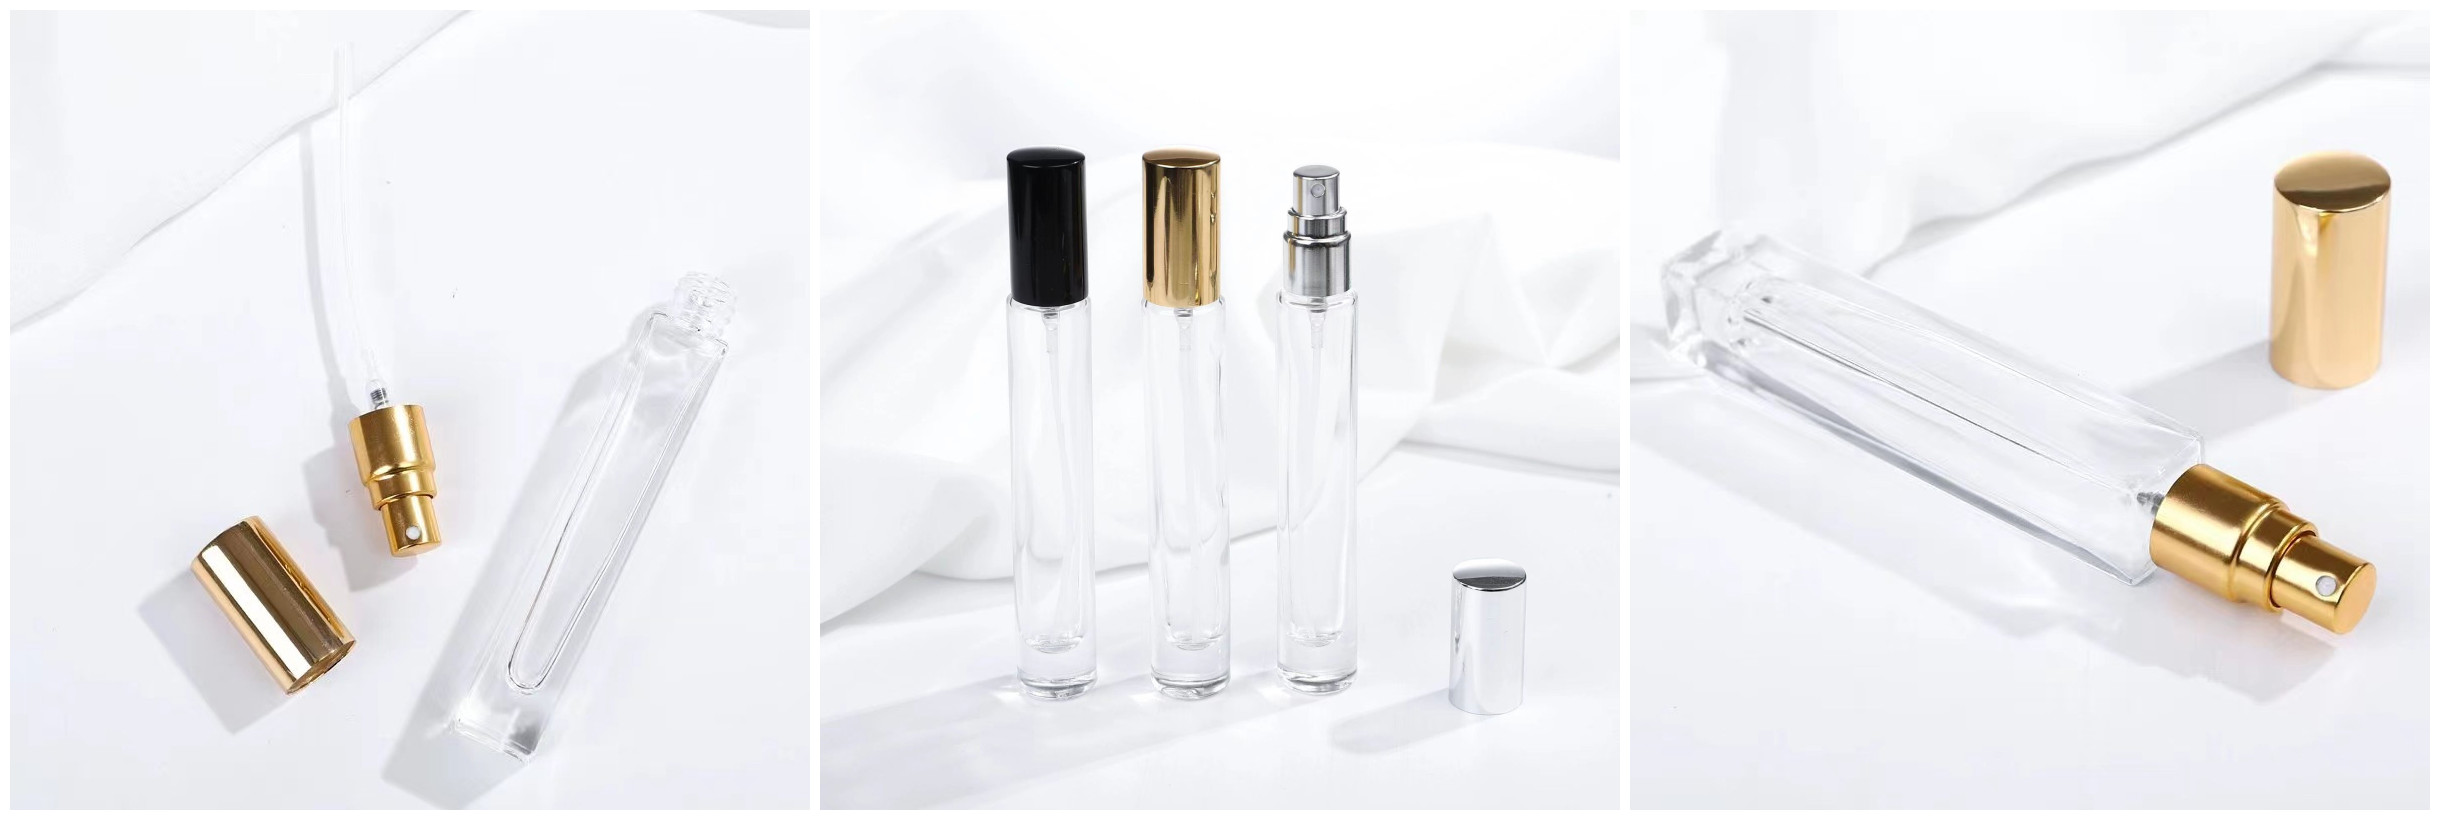 10ml Square glass perfume sample vial na may screw spray